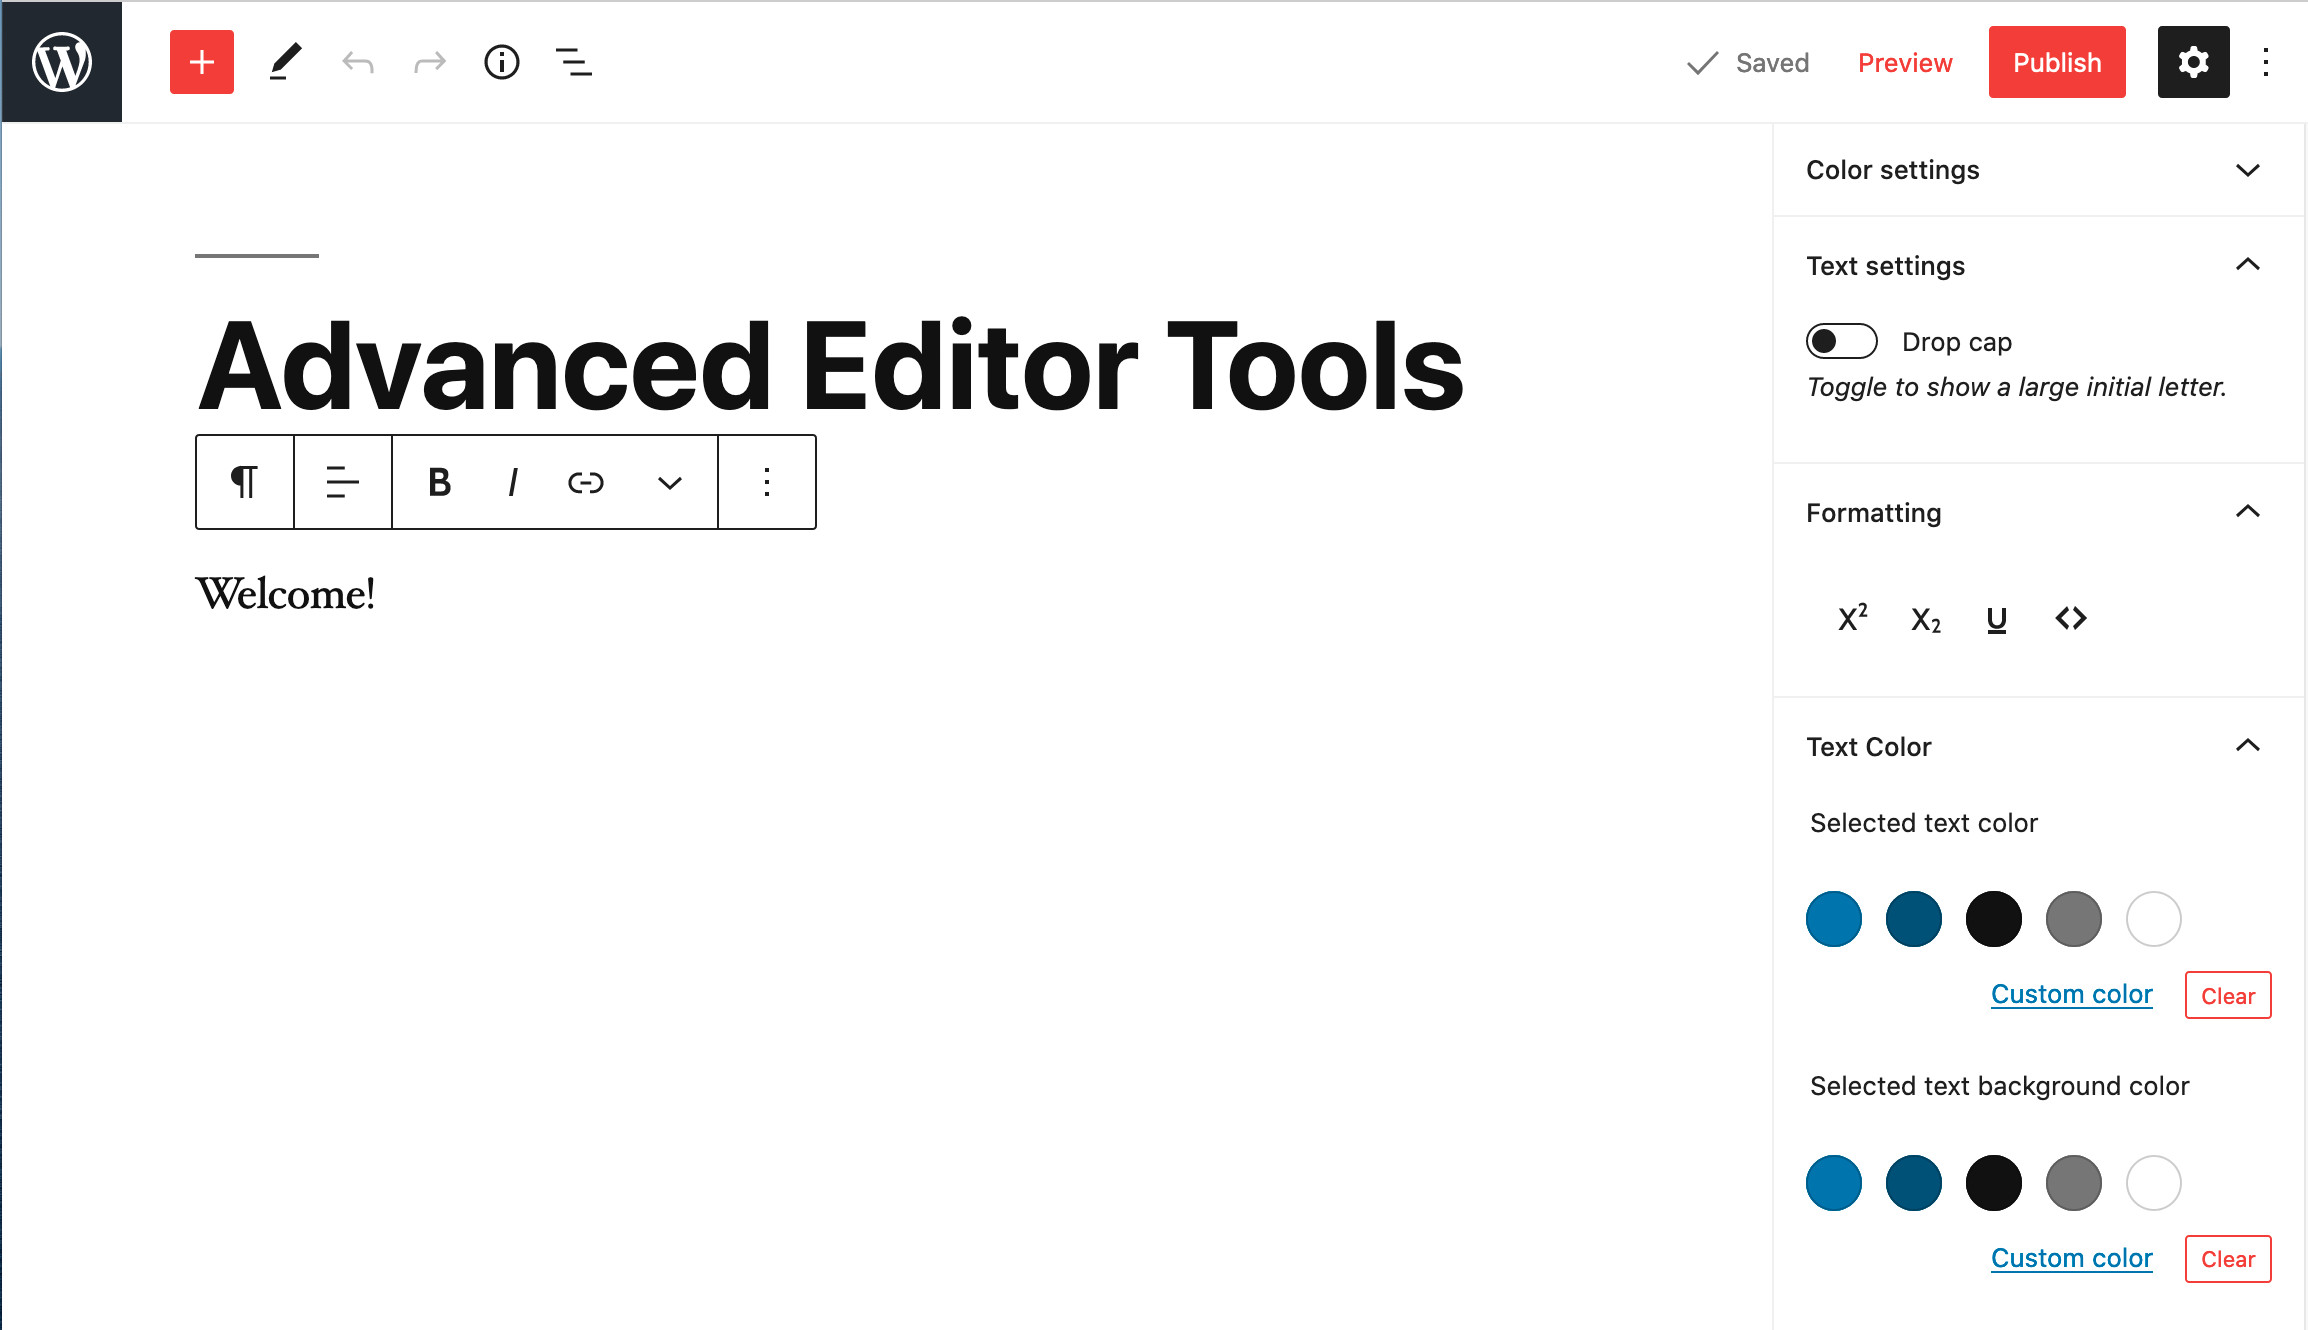 Advanced Editor Tools Screenshot